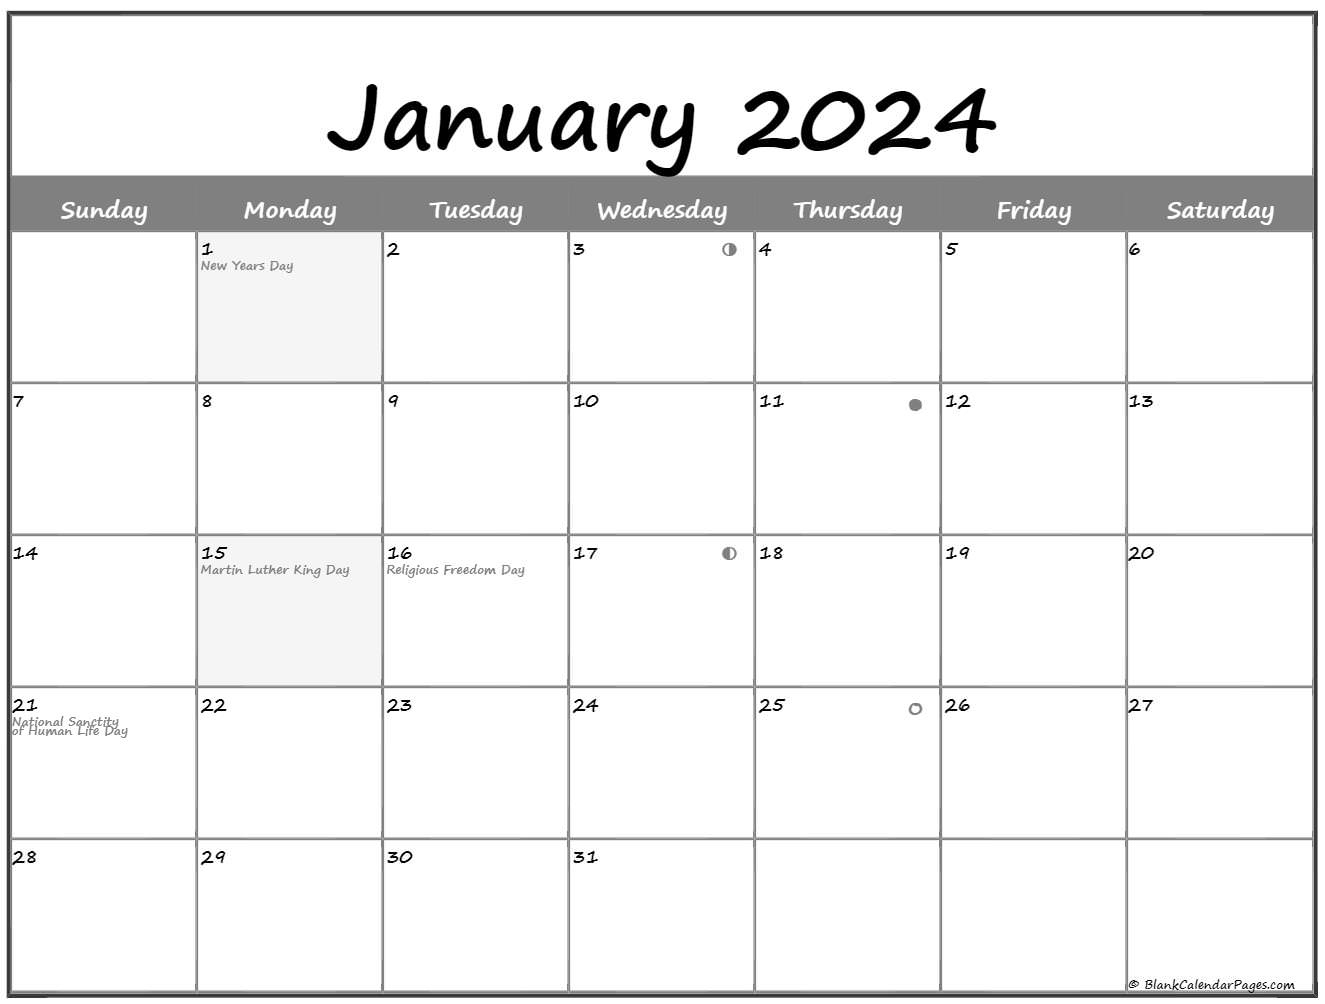 January 2024 Calendar Free Printable Calendar January 2024 Calendar - Free Printable 2024 Calendar With Moon Phases Cosmic Events